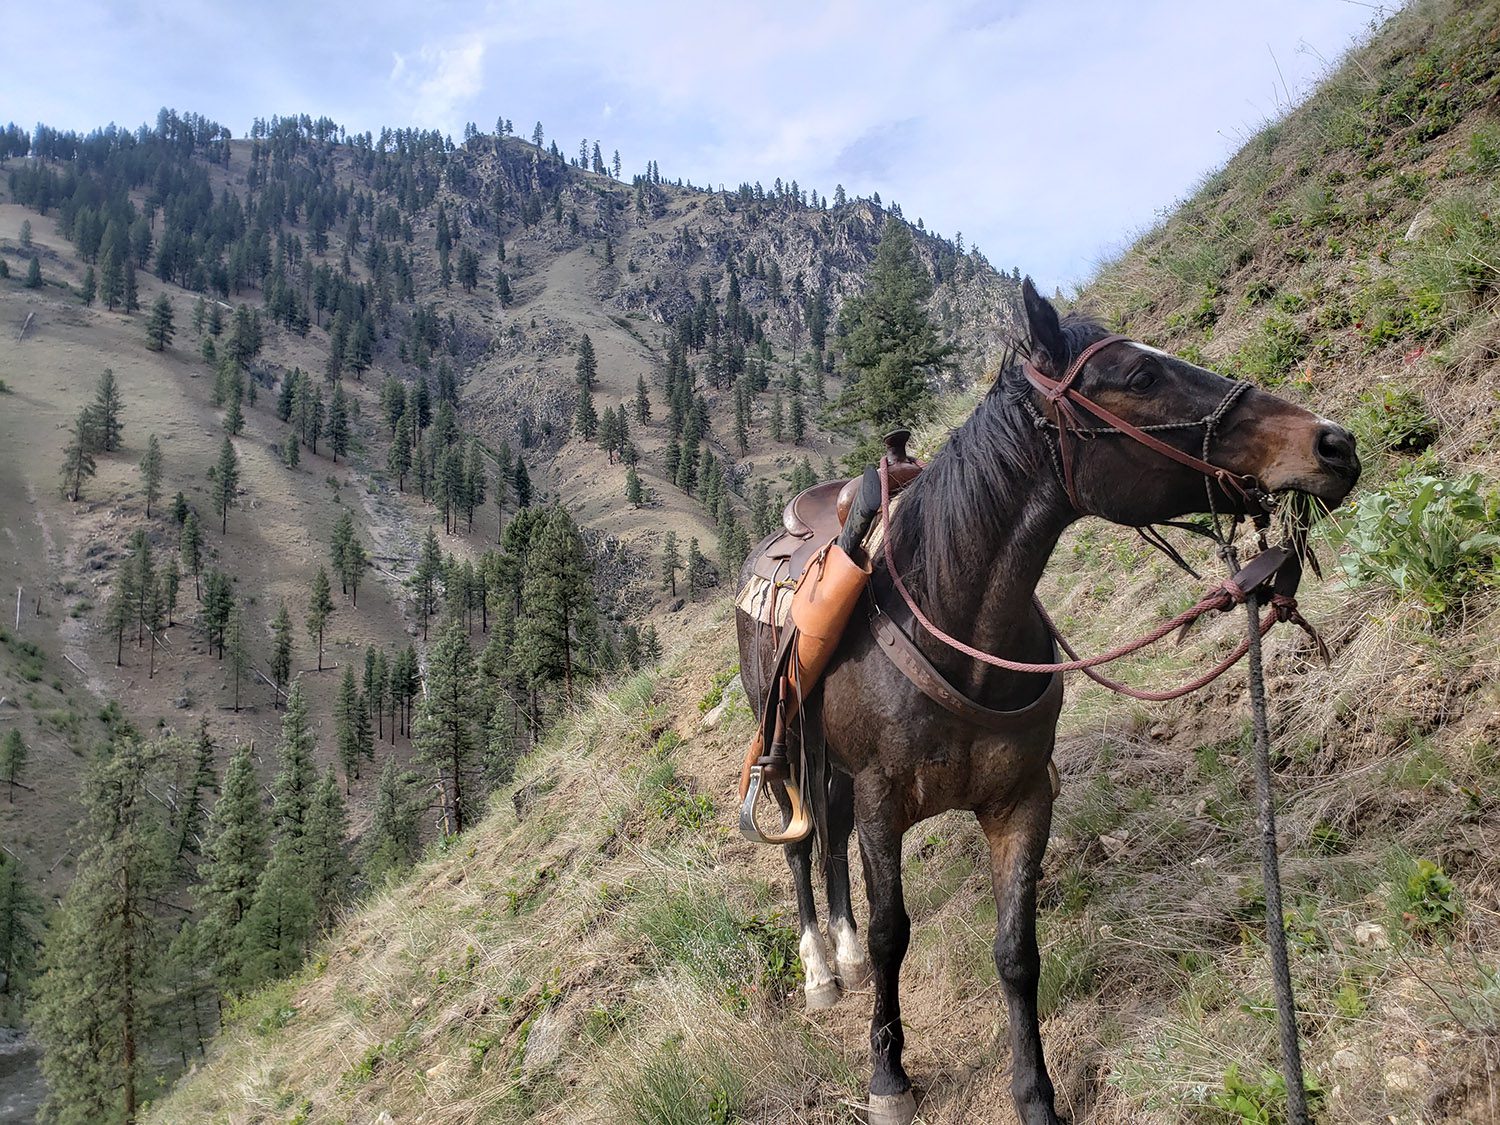 Hunting from horseback